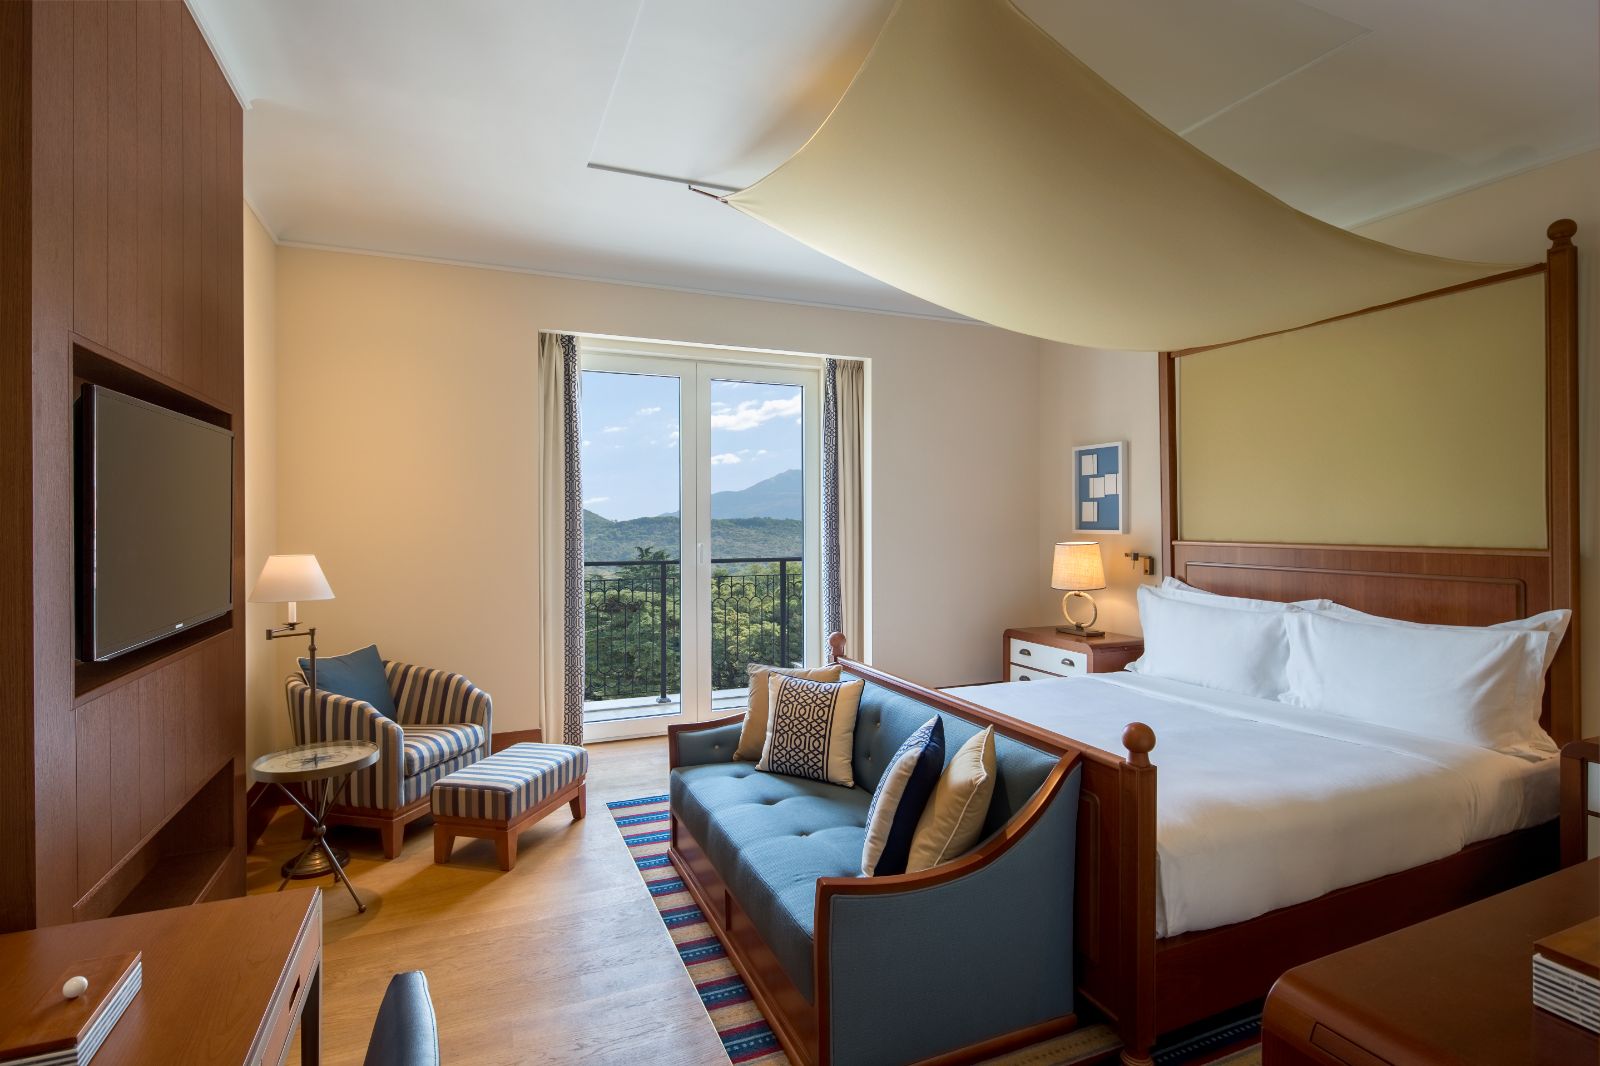 Venezia Wing suite with mountain views at Regent Porto Montenegro in the Boka Bay of Montenegro